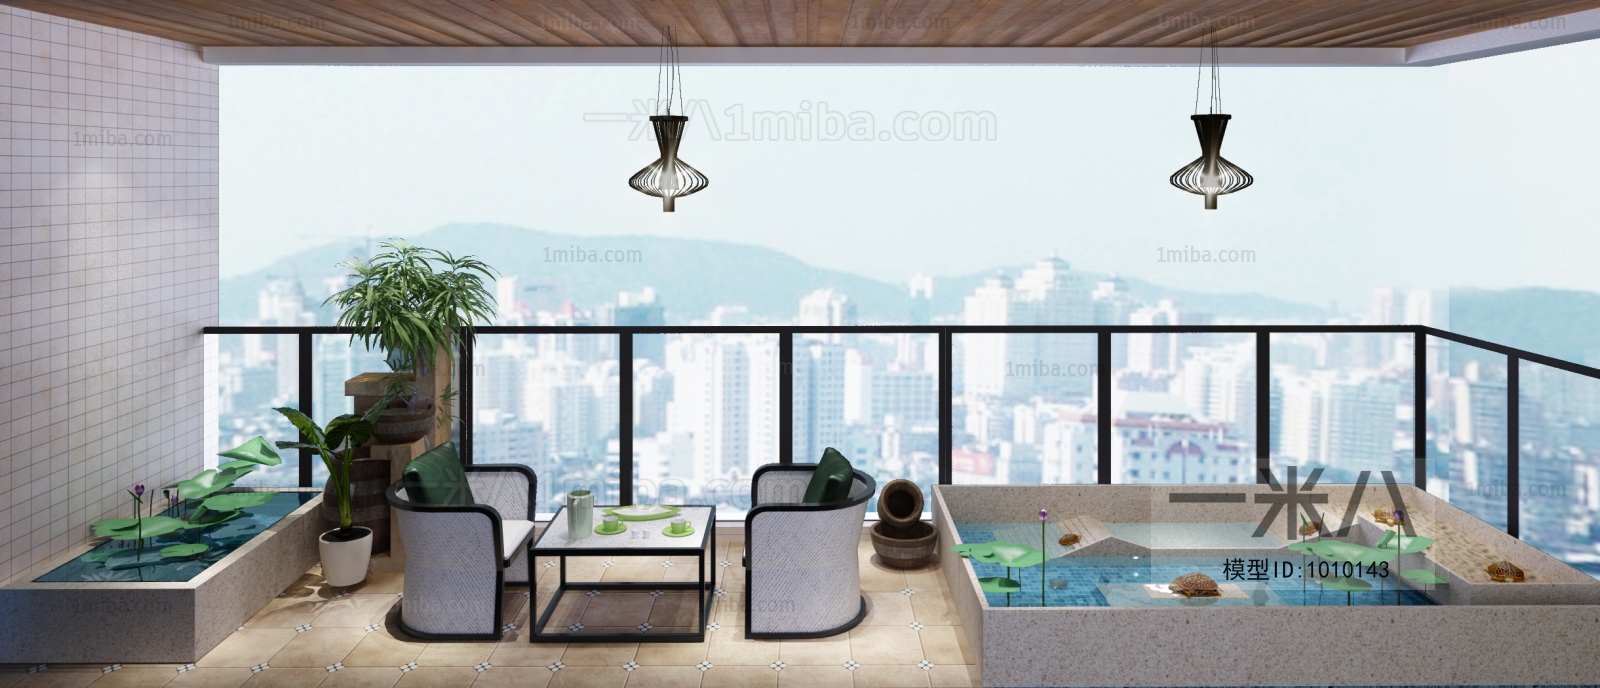 New Chinese Style Balcony